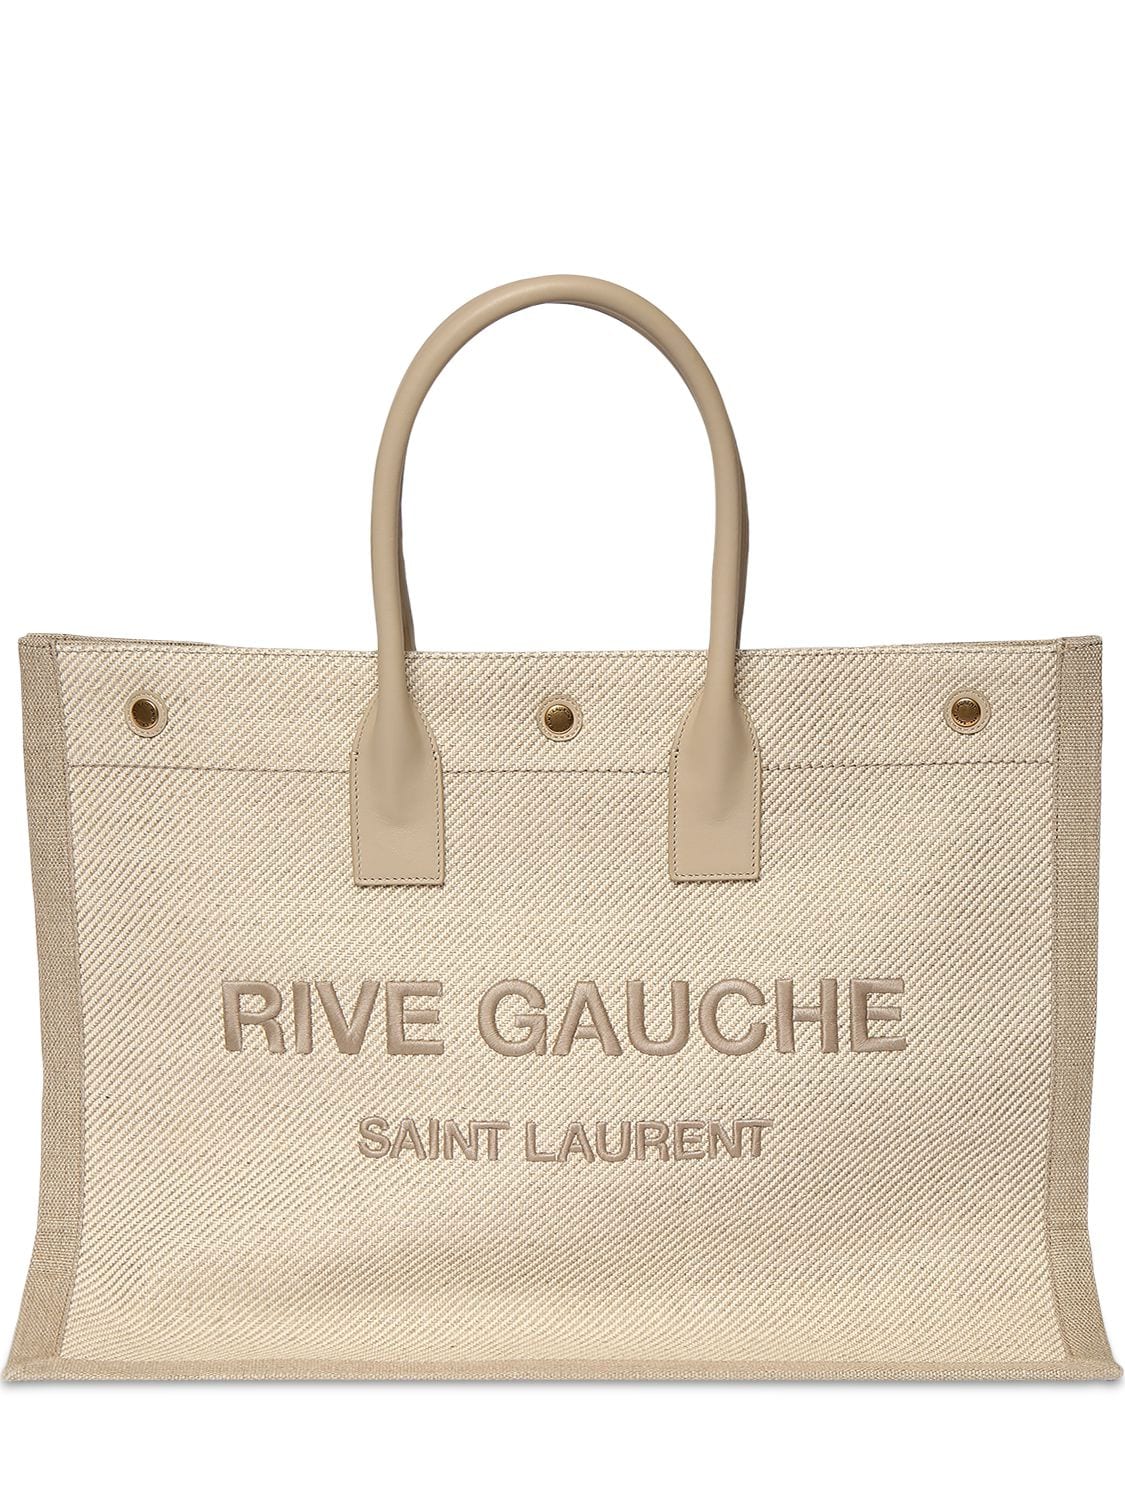 Saint Laurent Rive Gauche Panier Tote in Greggio, Nero & Brick